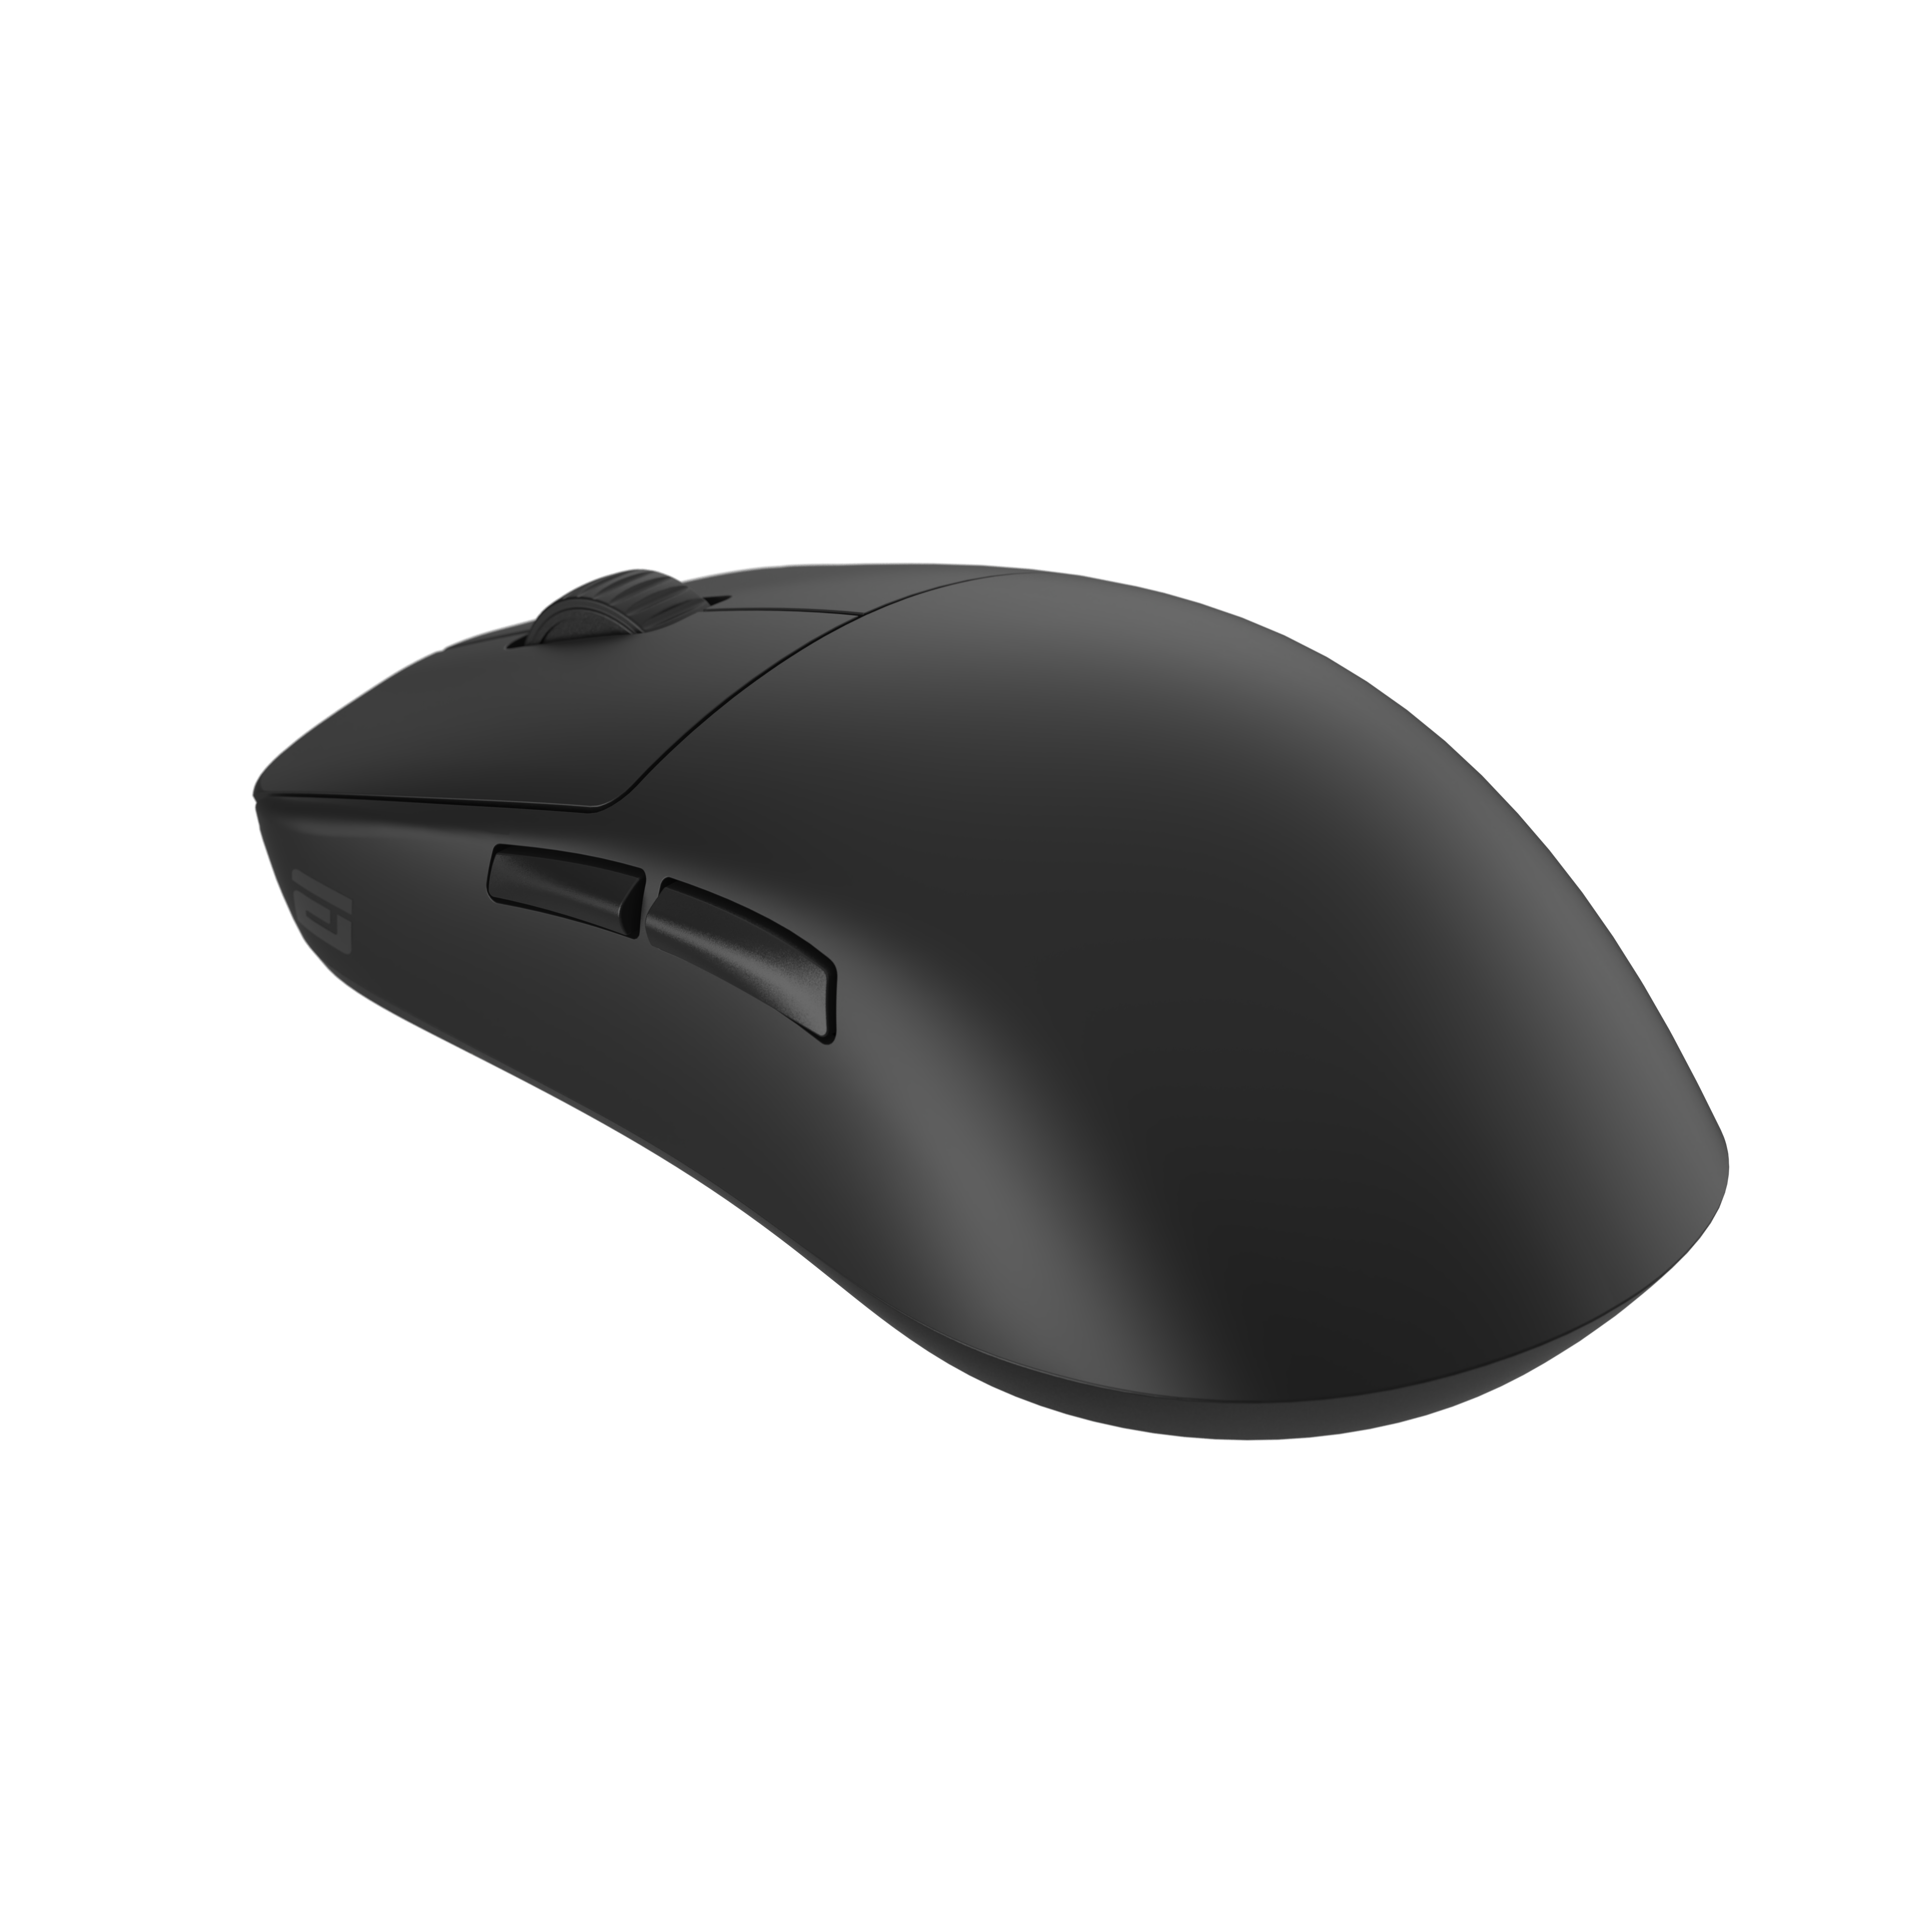 OP1we Gaming Mouse - Black